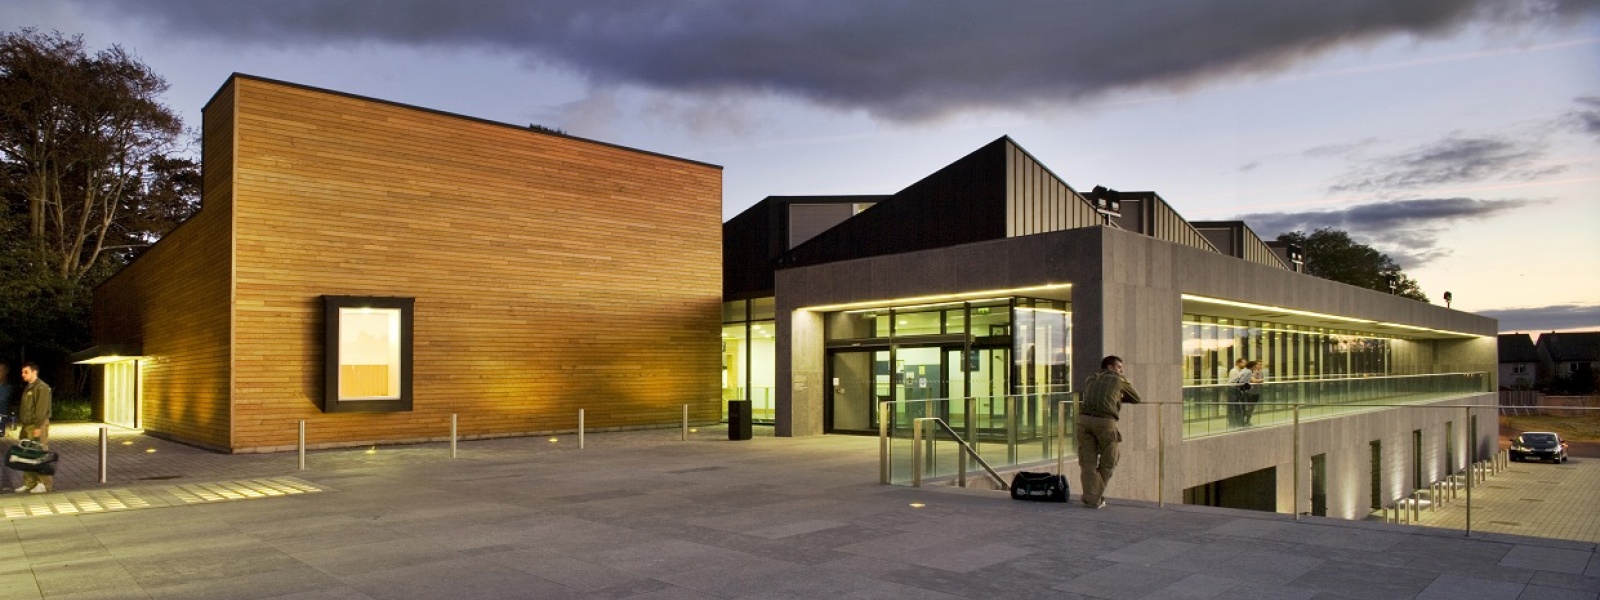 MIC Limerick campus Tailteann sports building